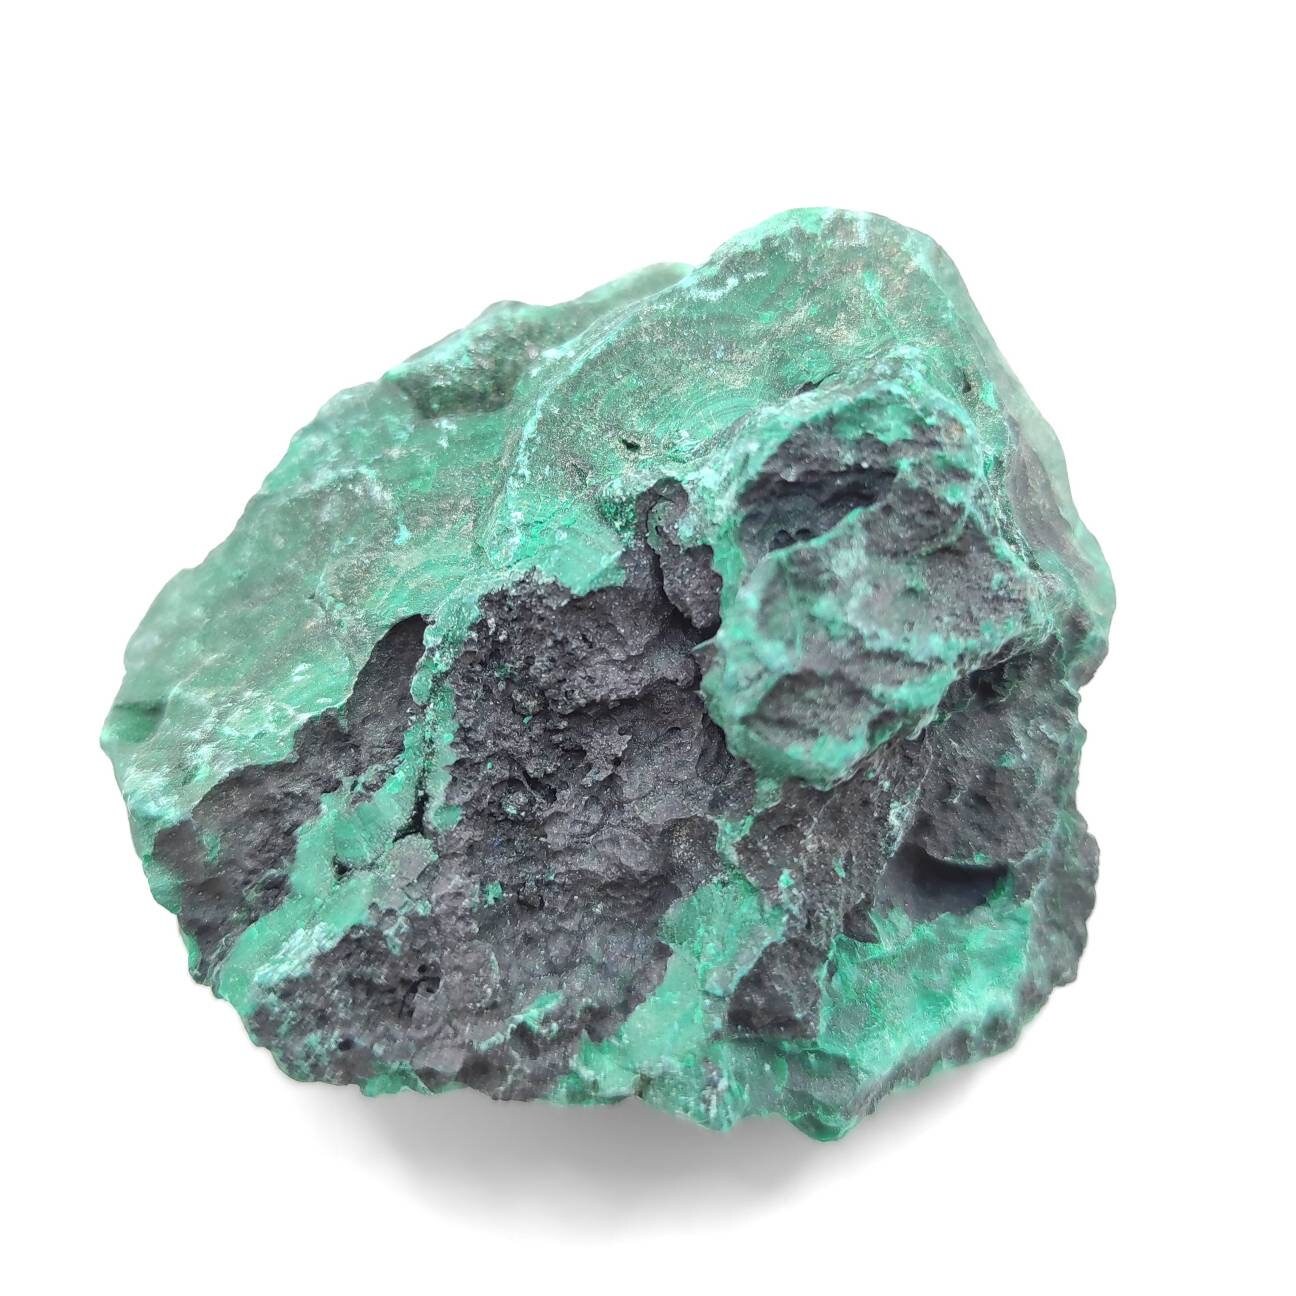 88g Rough Malachite Chunk - Mineral Specimen - Natural Green Crystals - Green Malachite - Natural Raw Crystal Cluster - Unique Specimen